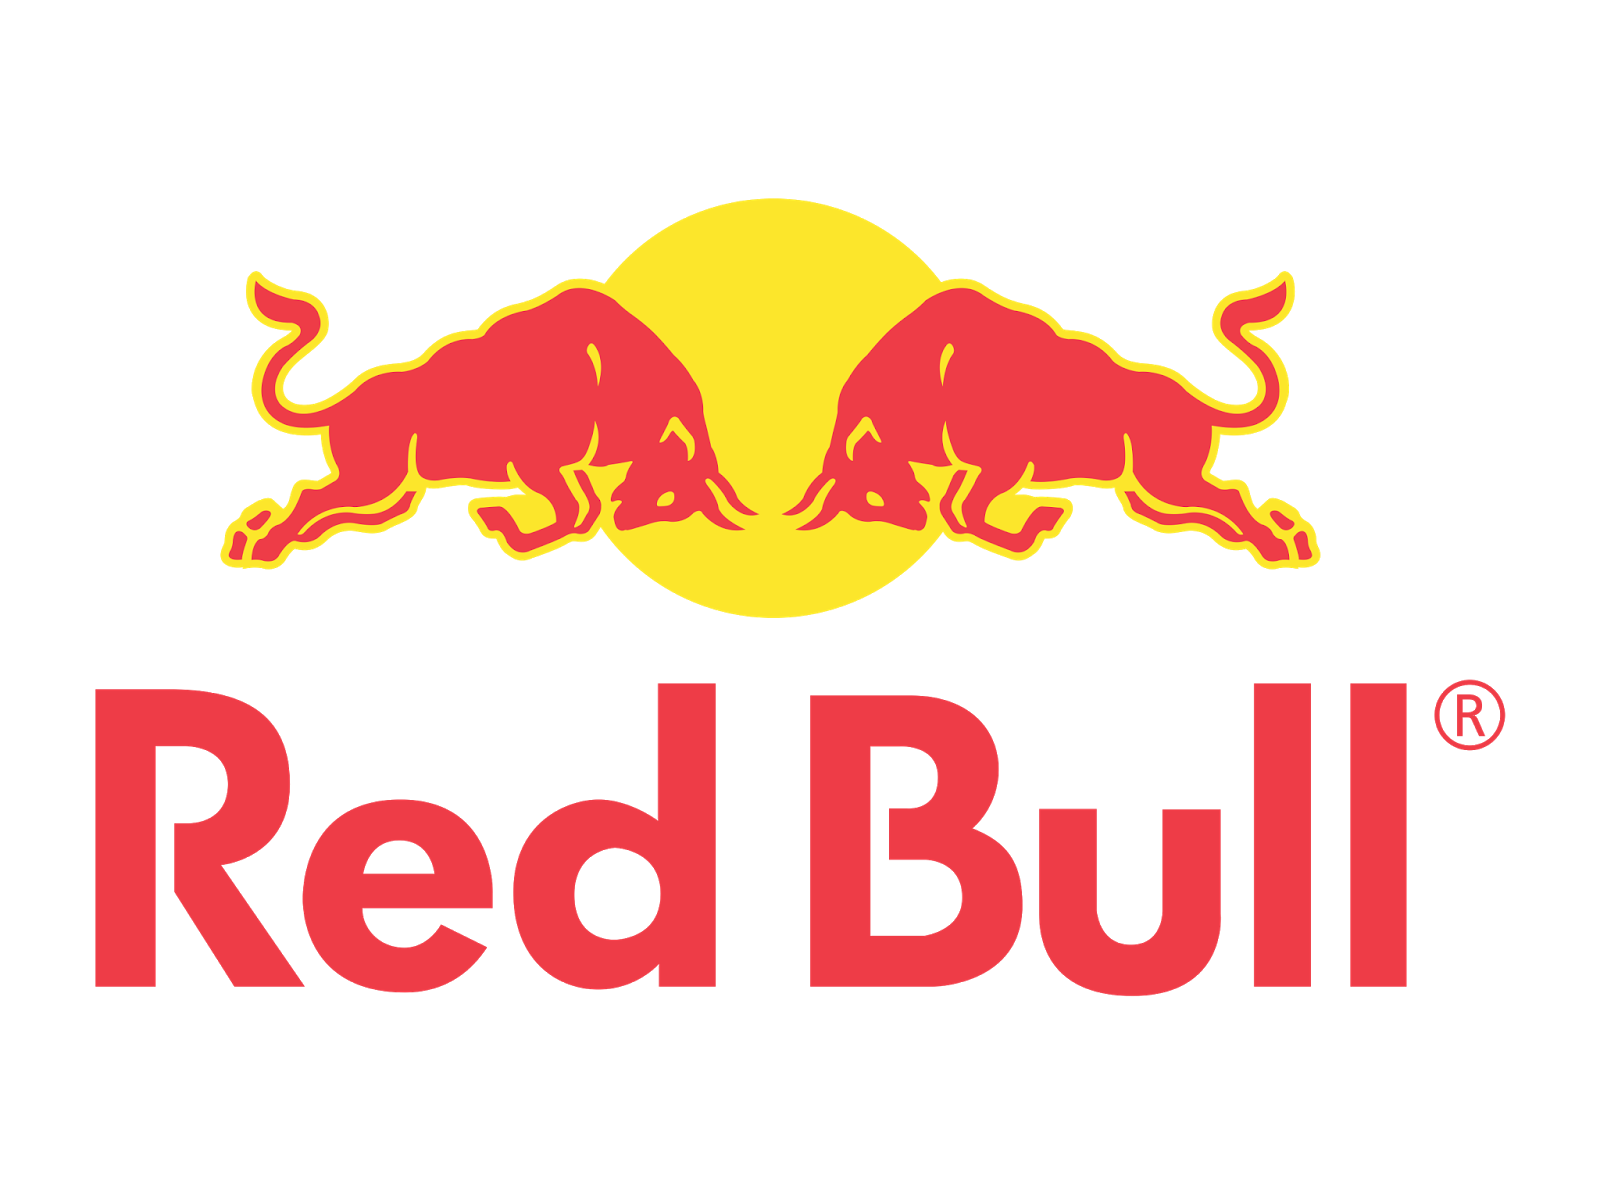 Ред буд. Ред Булл. Ред Булл эмблема. Red bull надпись. Red bull без фона.